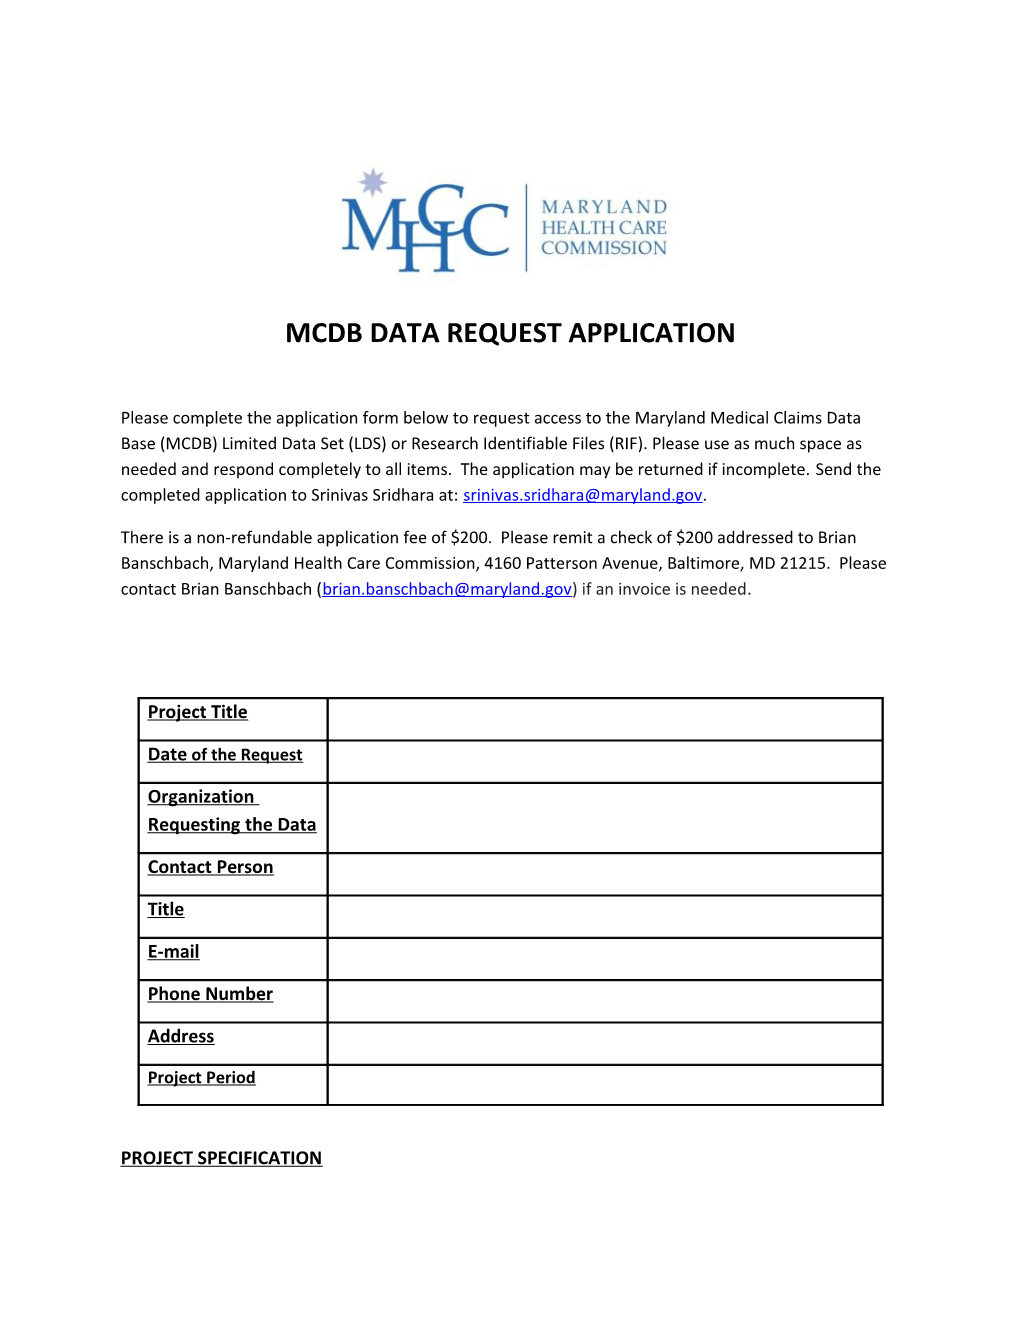 MCDB Data Request Application